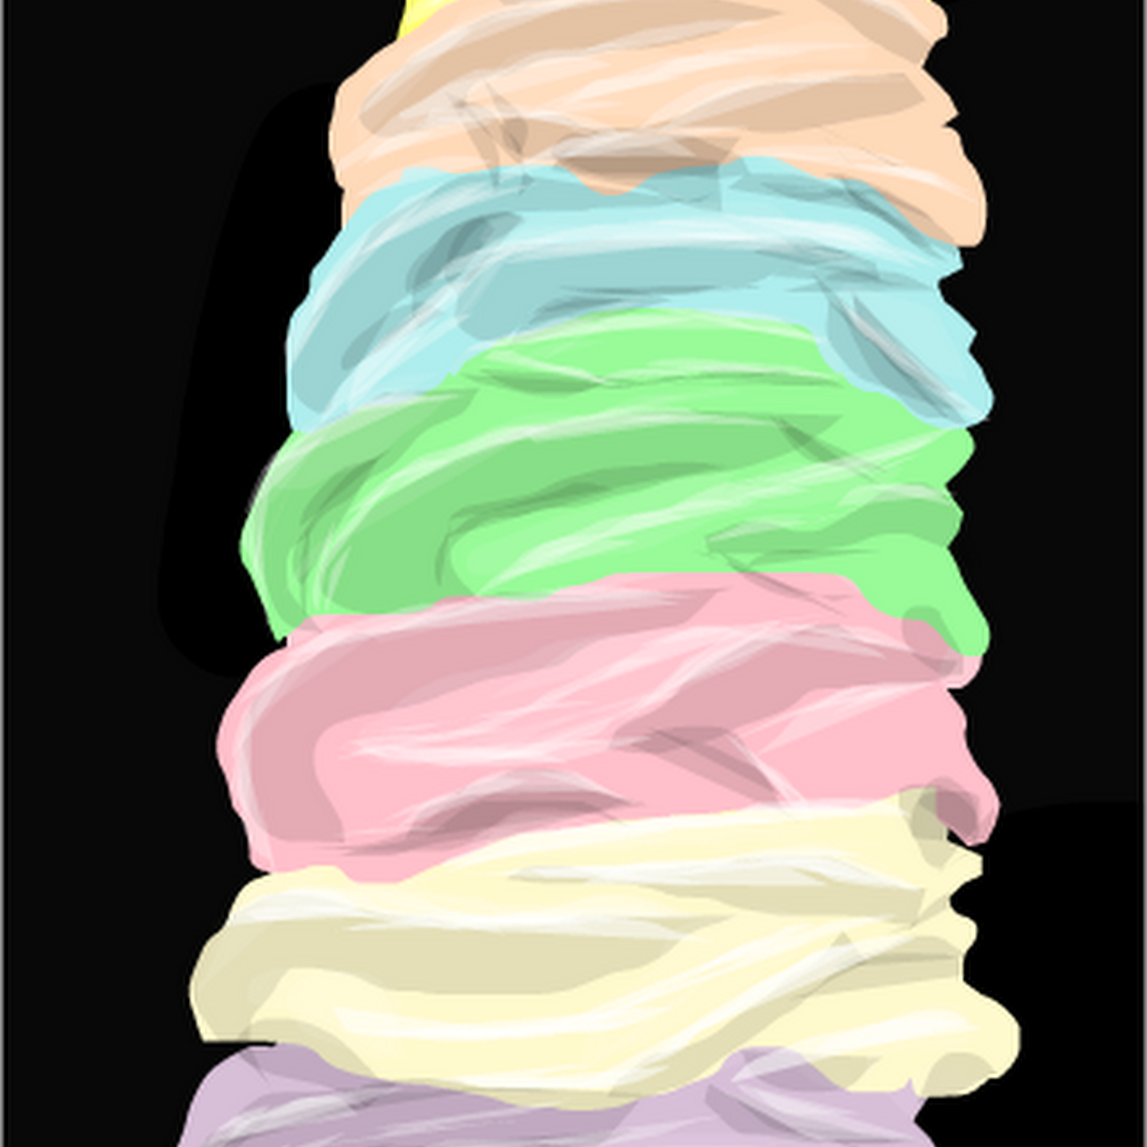 Tower of Ice Cream